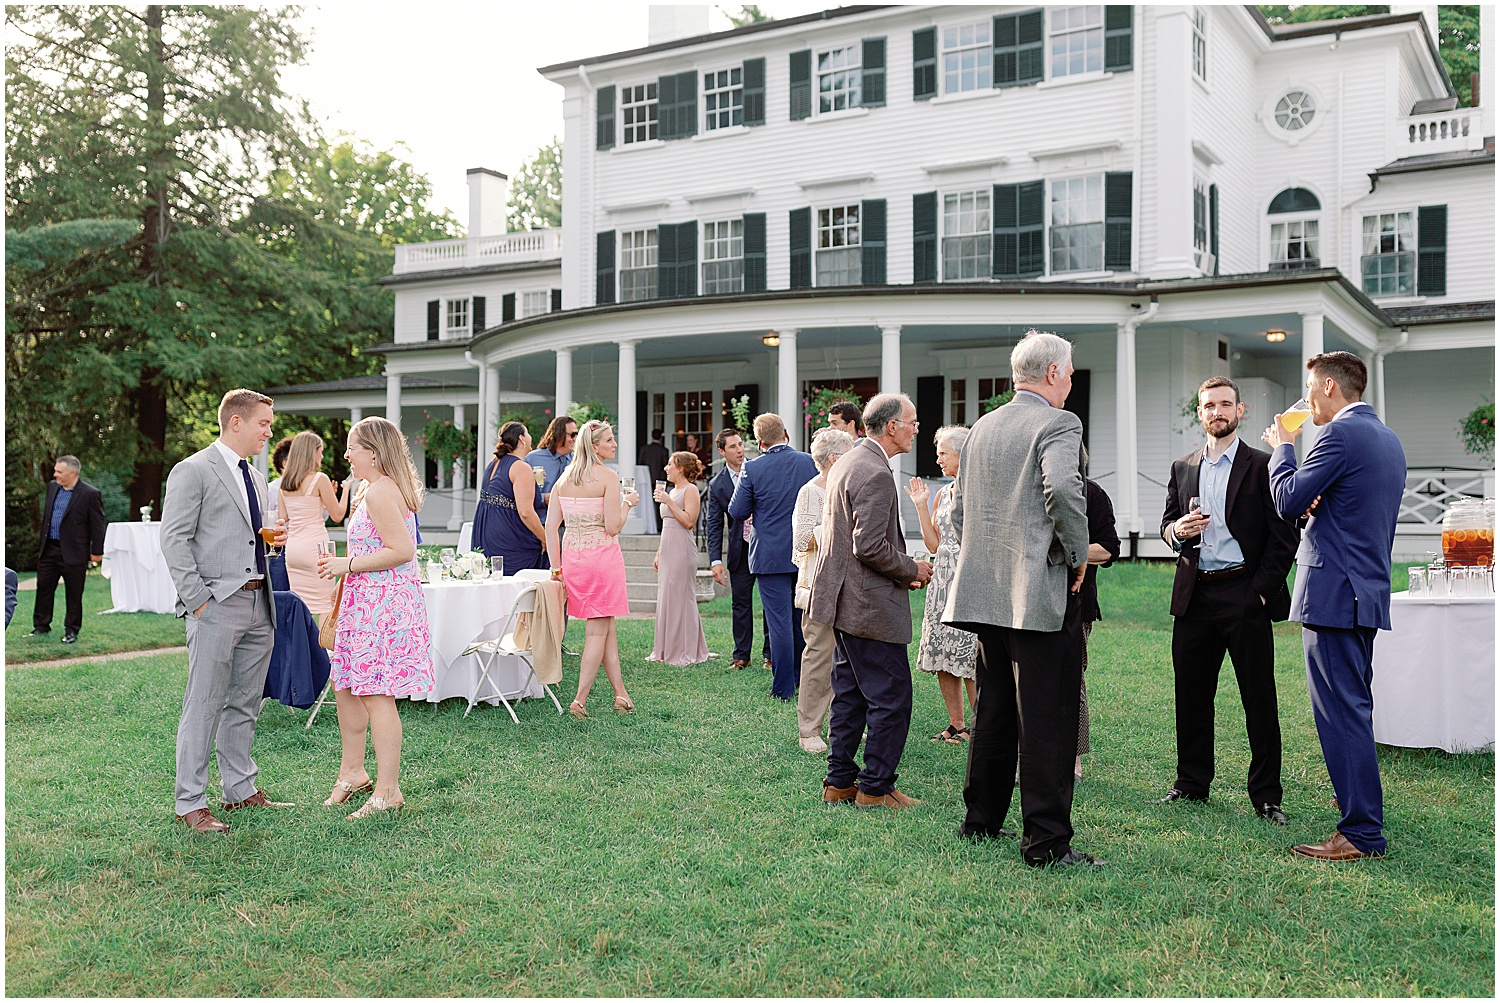 New England Estate wedding at Glen Magna Farms in Danvers Massachusetts